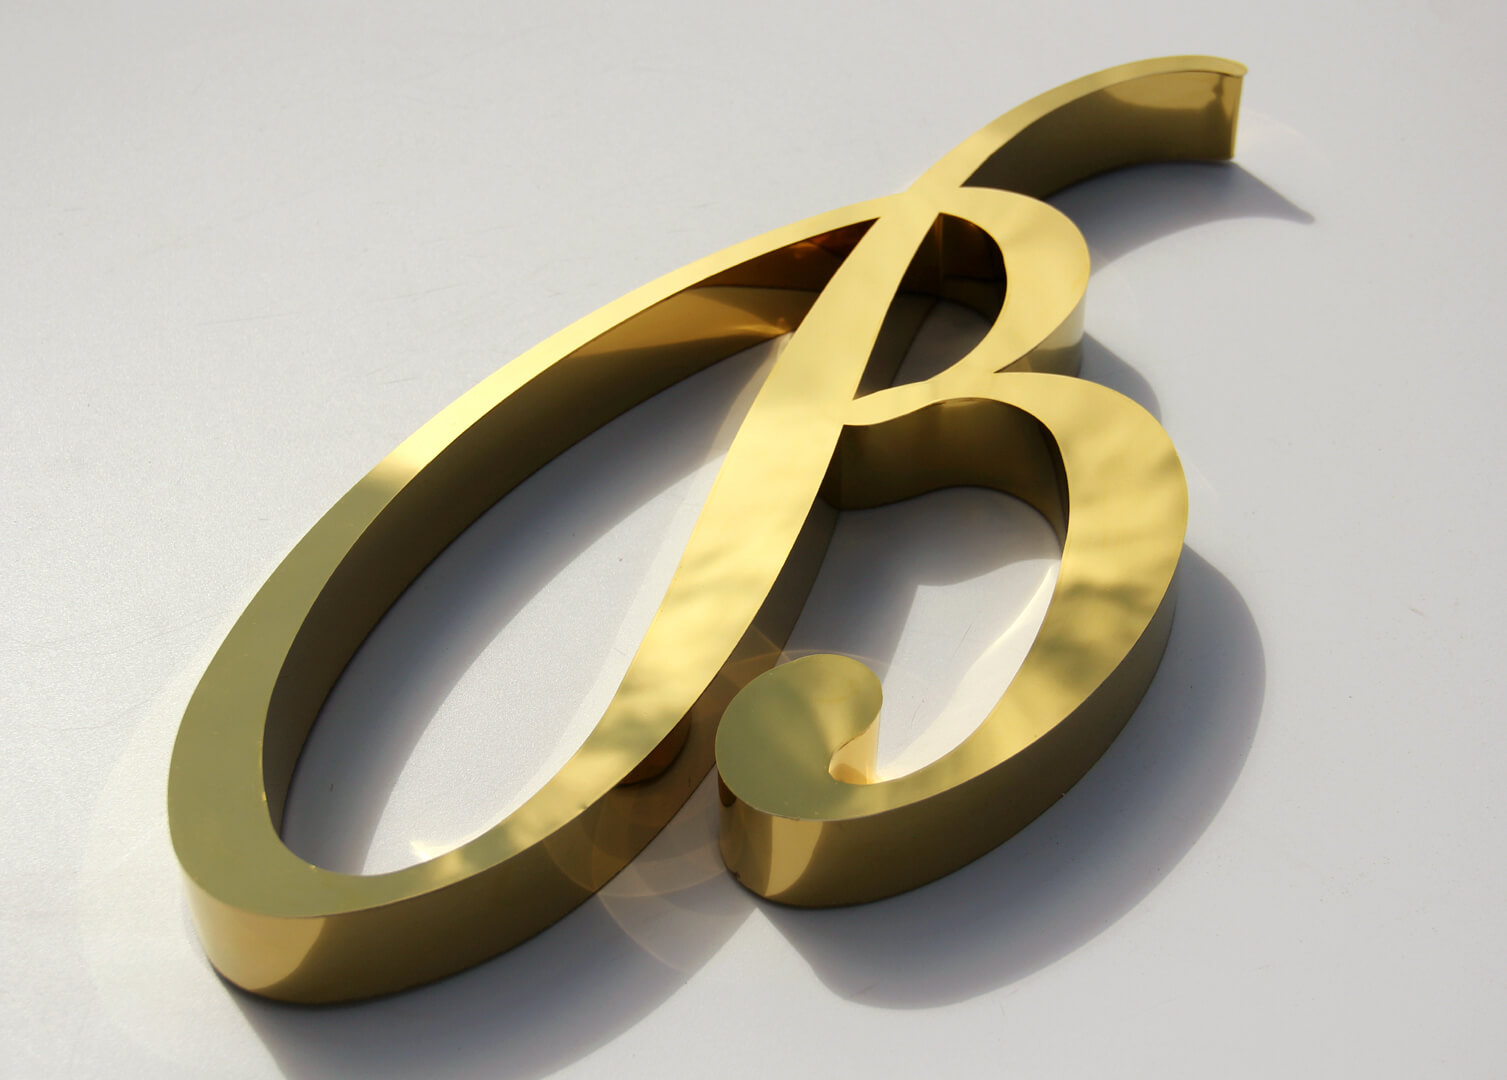 Lettre d'or B - Lettre B dorée en acier inoxydable.